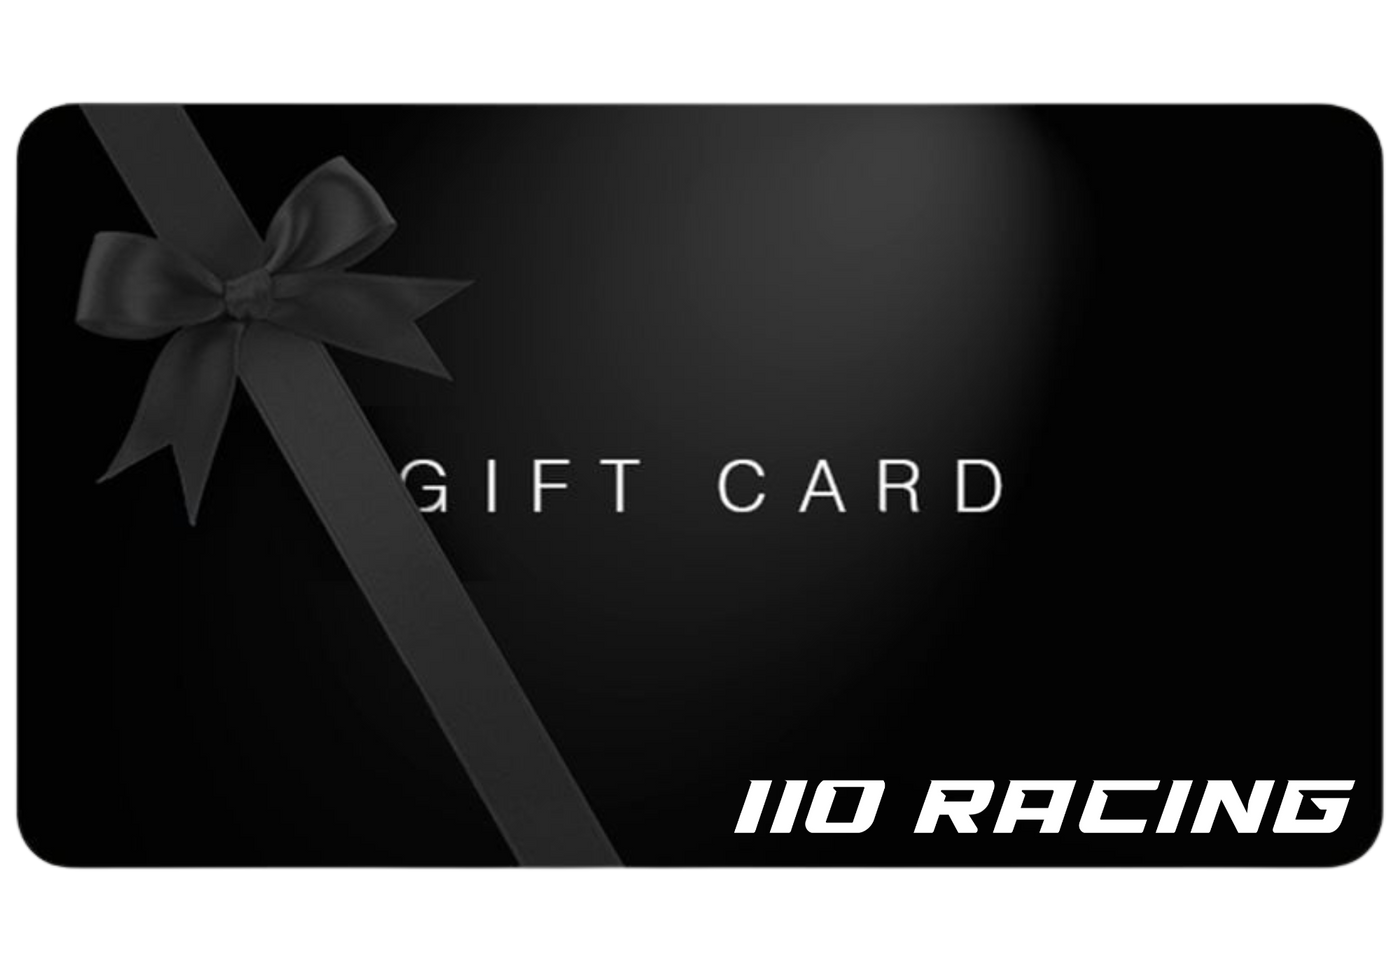 110 RACING x GIFT CARD